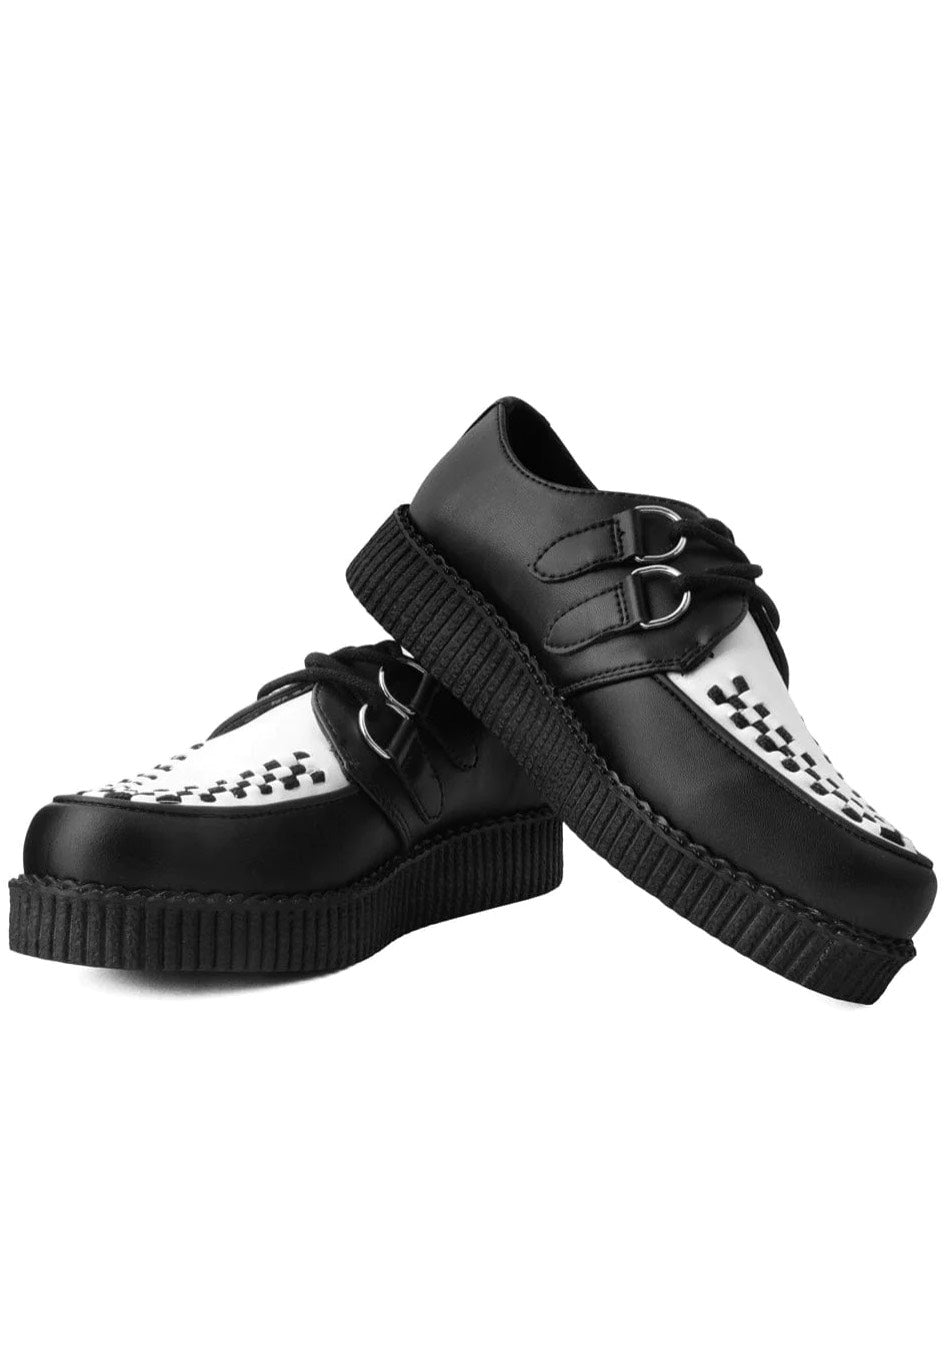 T.U.K. - Low Flex Round Toe Creeper Black/White - Girl Shoes